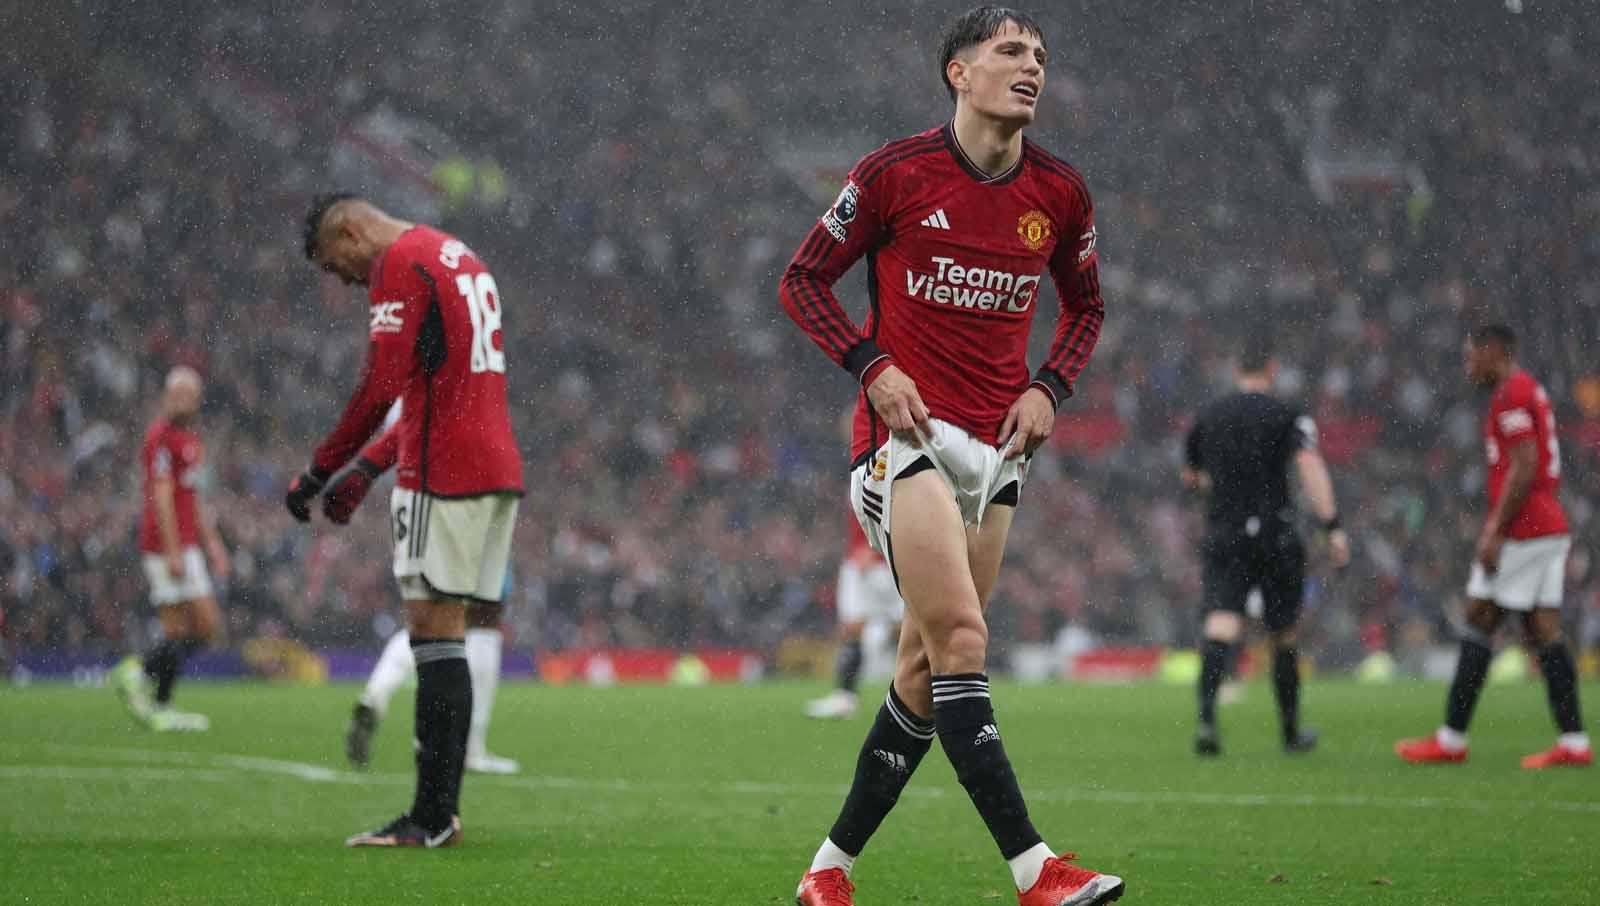 Reaksi pemain Manchester United Alejandro Garnacho terlihat sedih dan kecewa usai timnya kalah dari Crystal Palace di laga Liga Inggris. (Foto: REUTERS/Russell Cheyne)